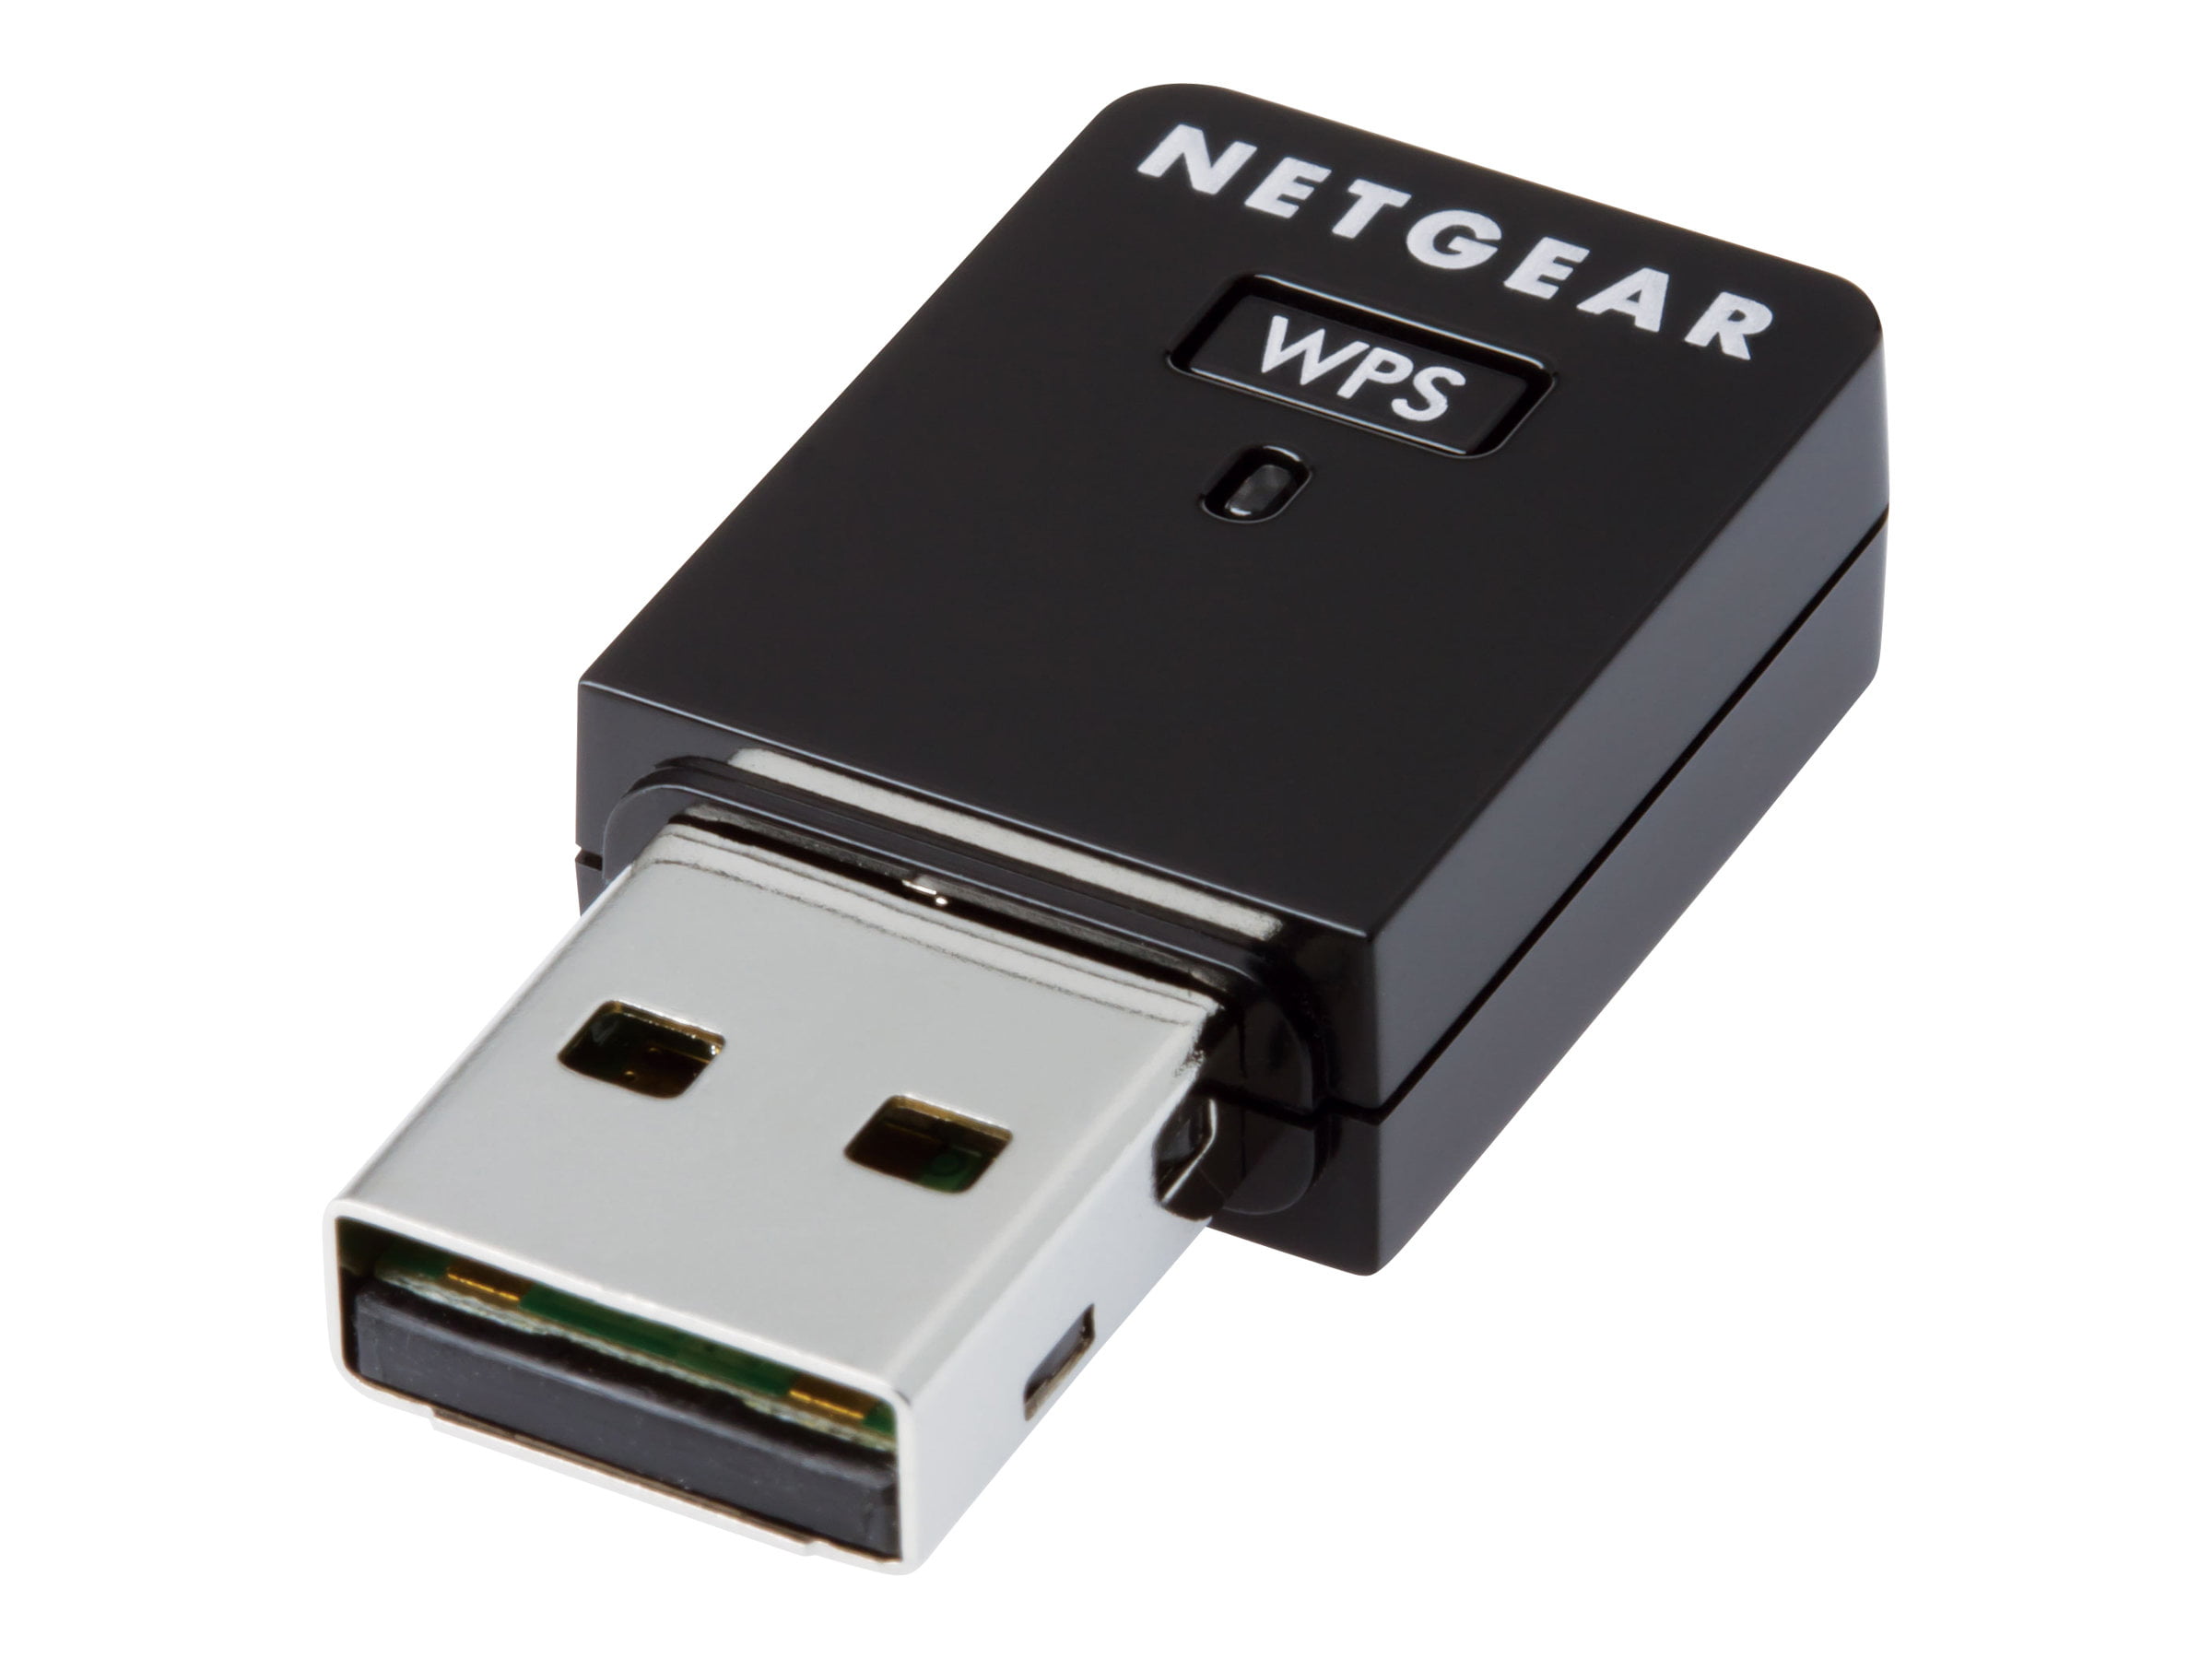 Displacement nedadgående Derfra NETGEAR WNA3100M - Network adapter - USB 2.0 - 802.11b/g/n - Walmart.com